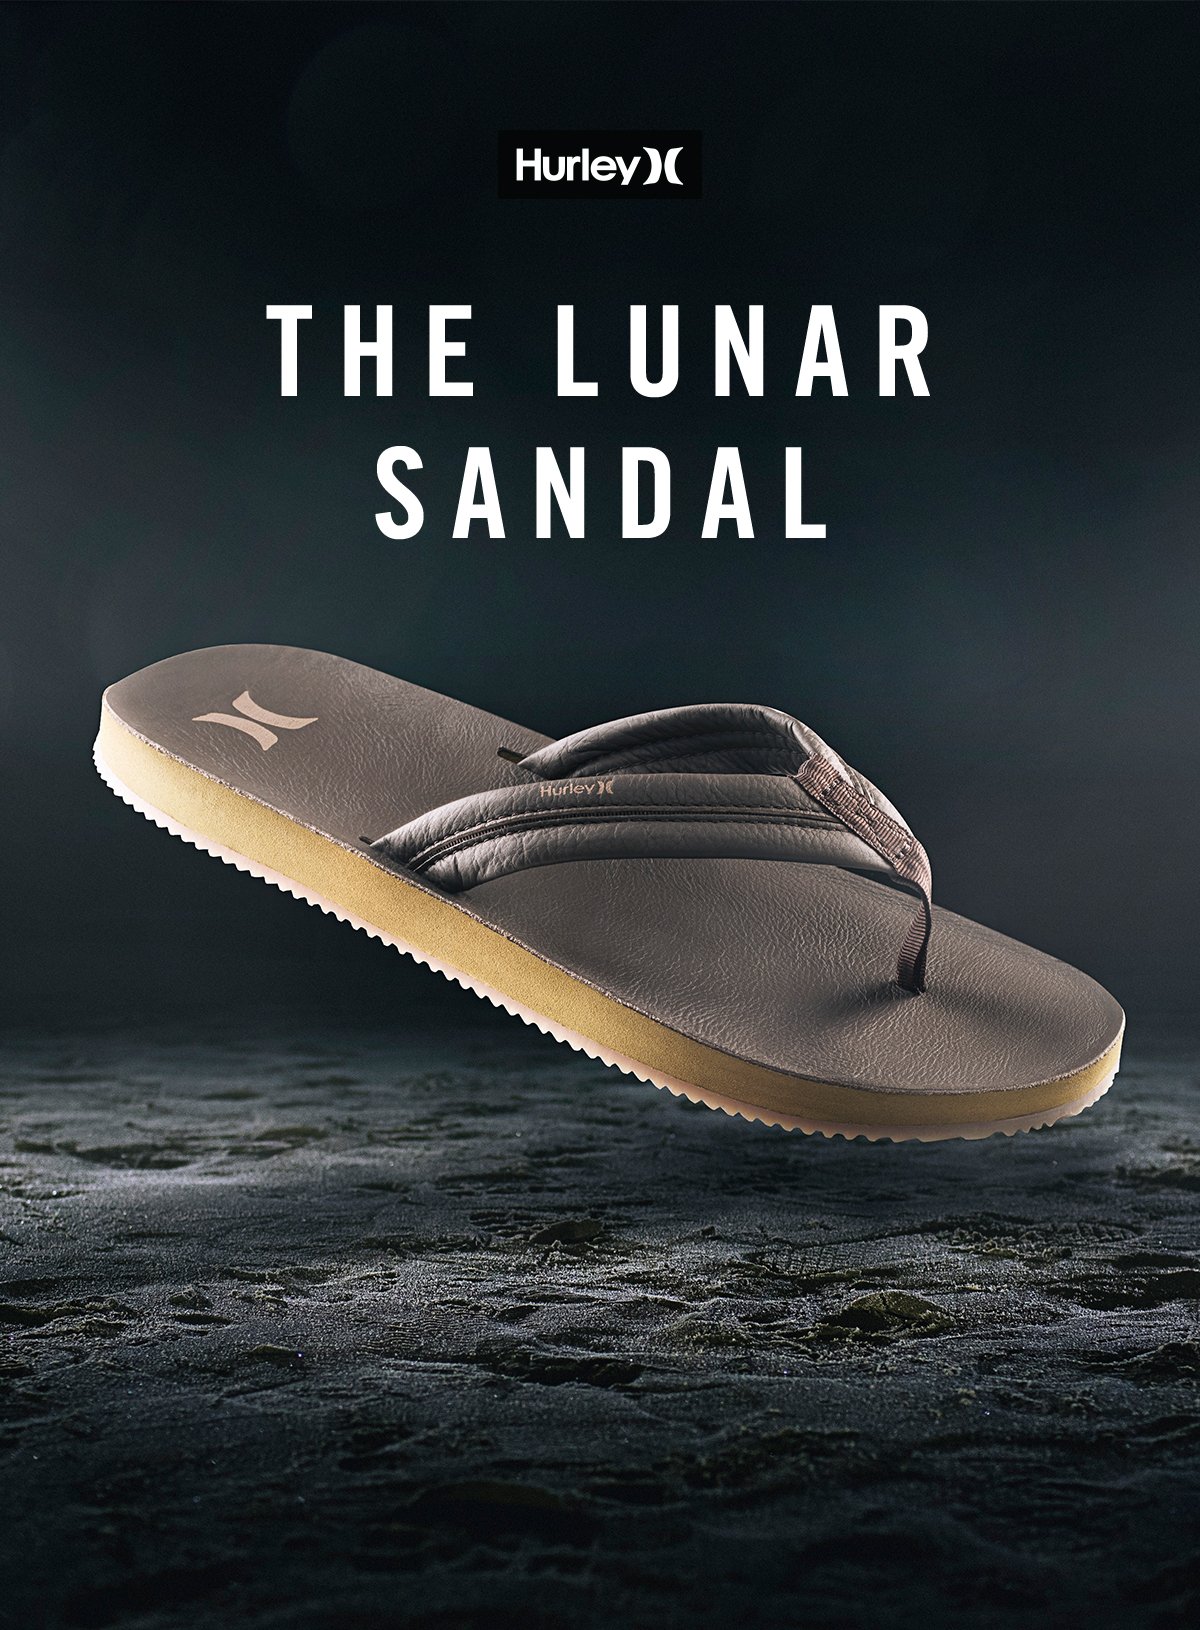 lunar sandals 2019